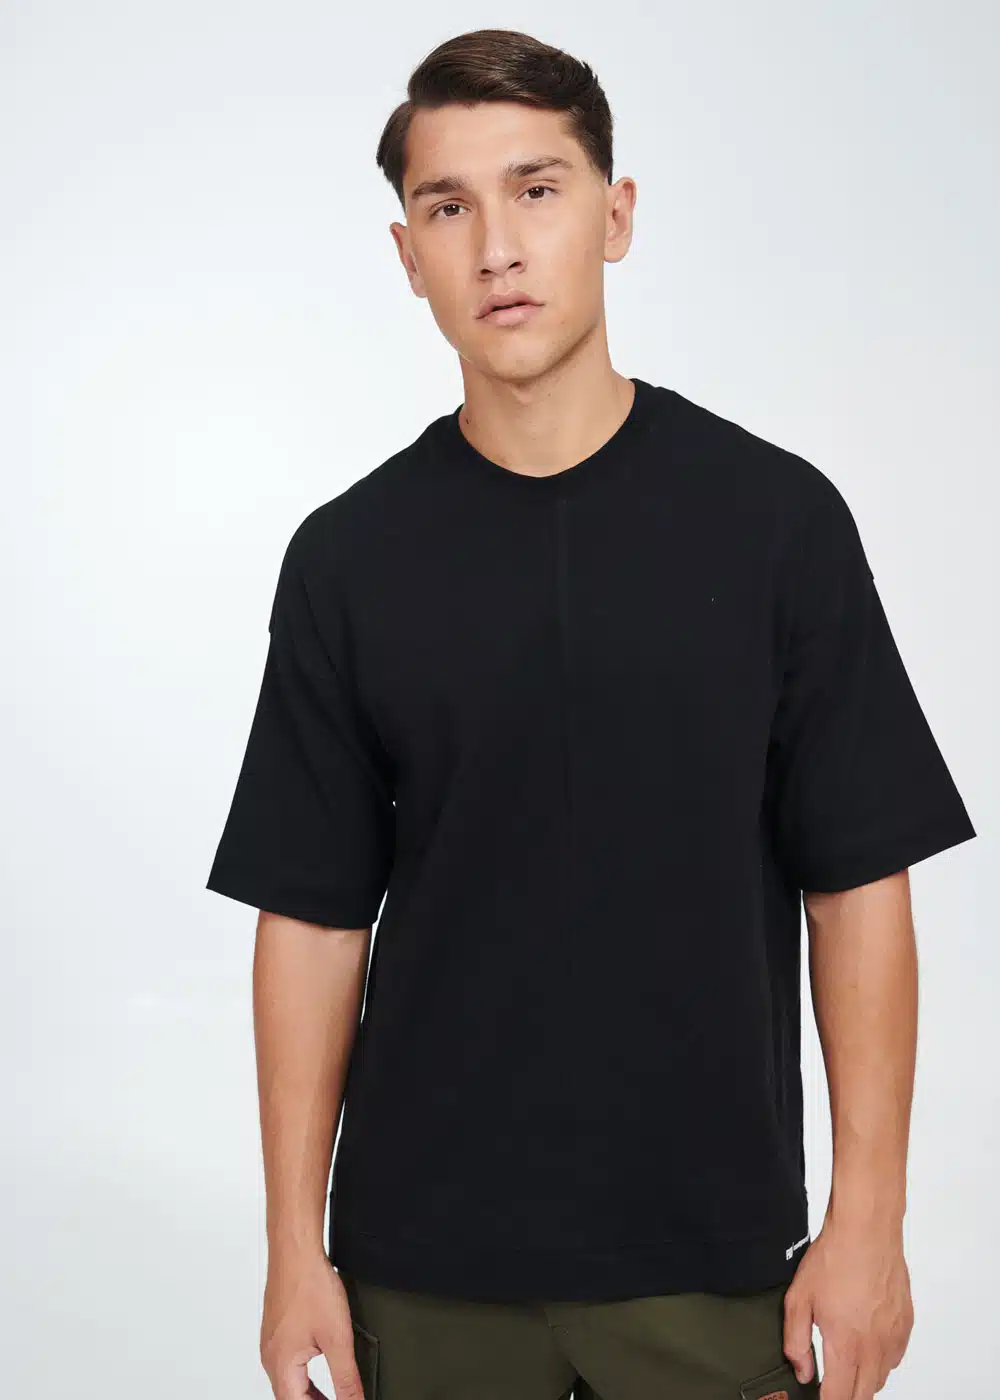 P/COC Ανδρικό T-Shirt με Στρογγυλή Λαιμόκοψη και Εξωτερικές Ραφές Μαύρο - P-1719 - BLACK